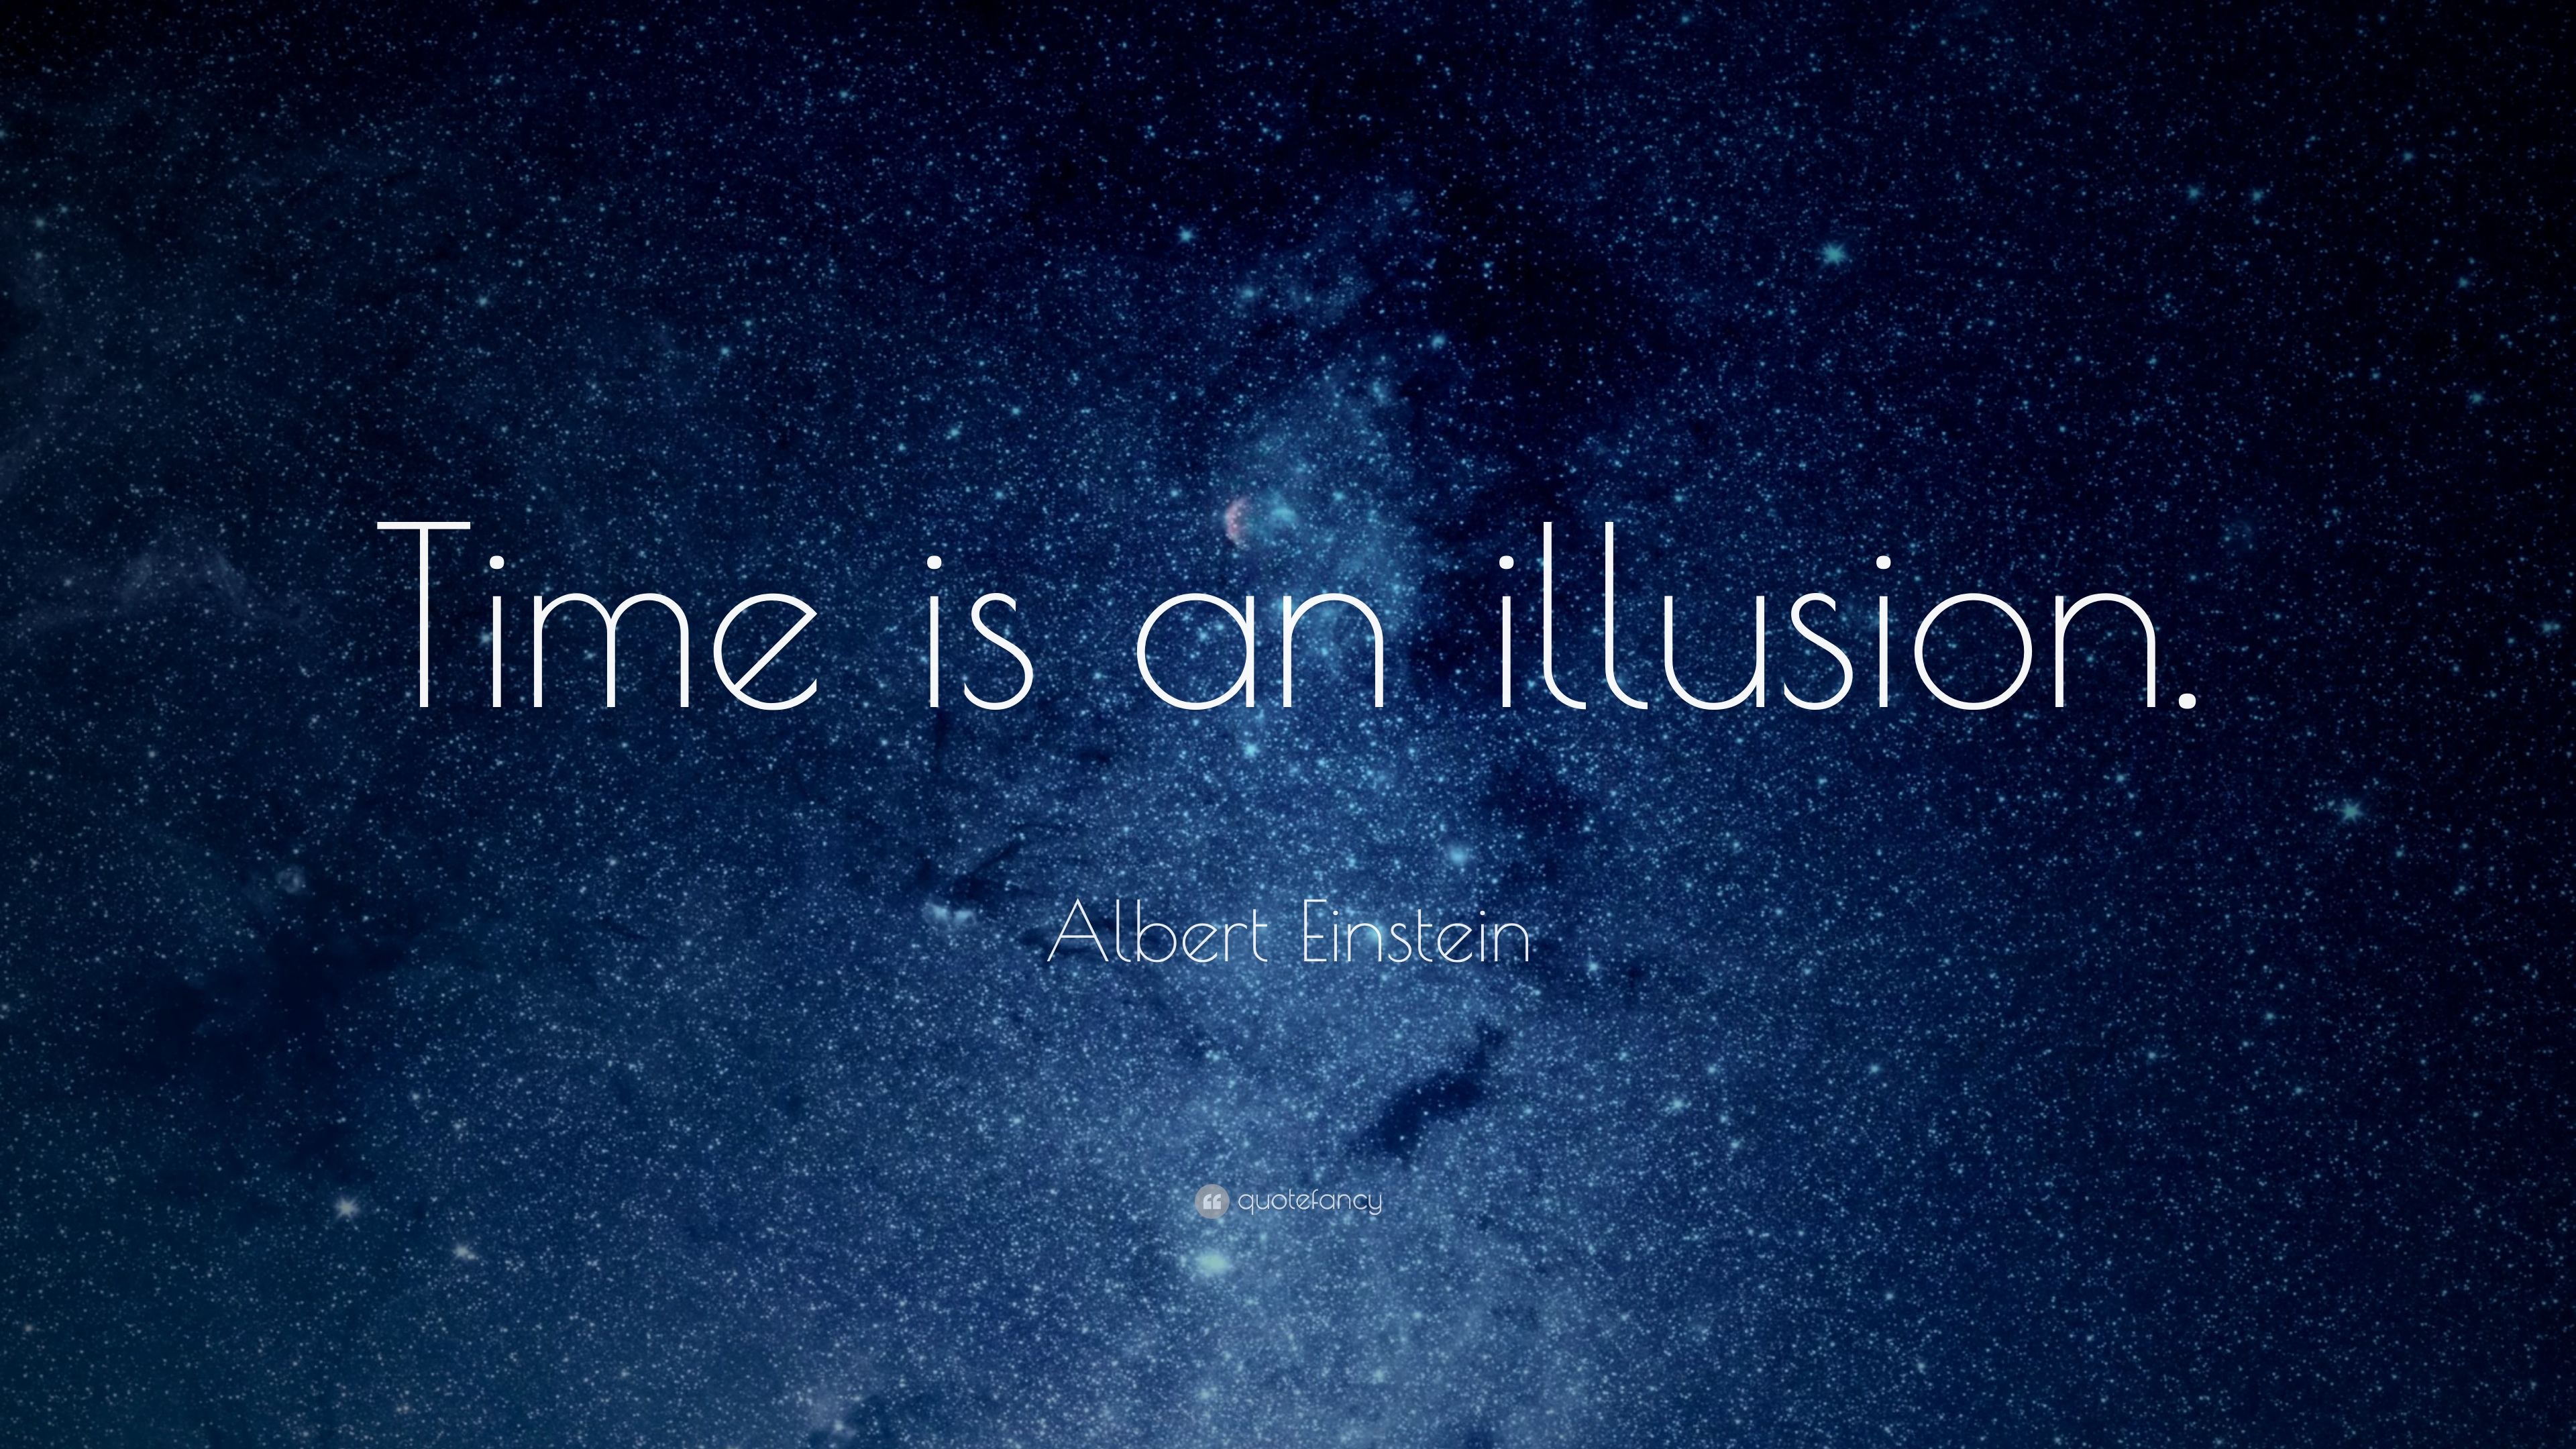 Albert Einstein Quote: “Time is an illusion.” 28 wallpaper